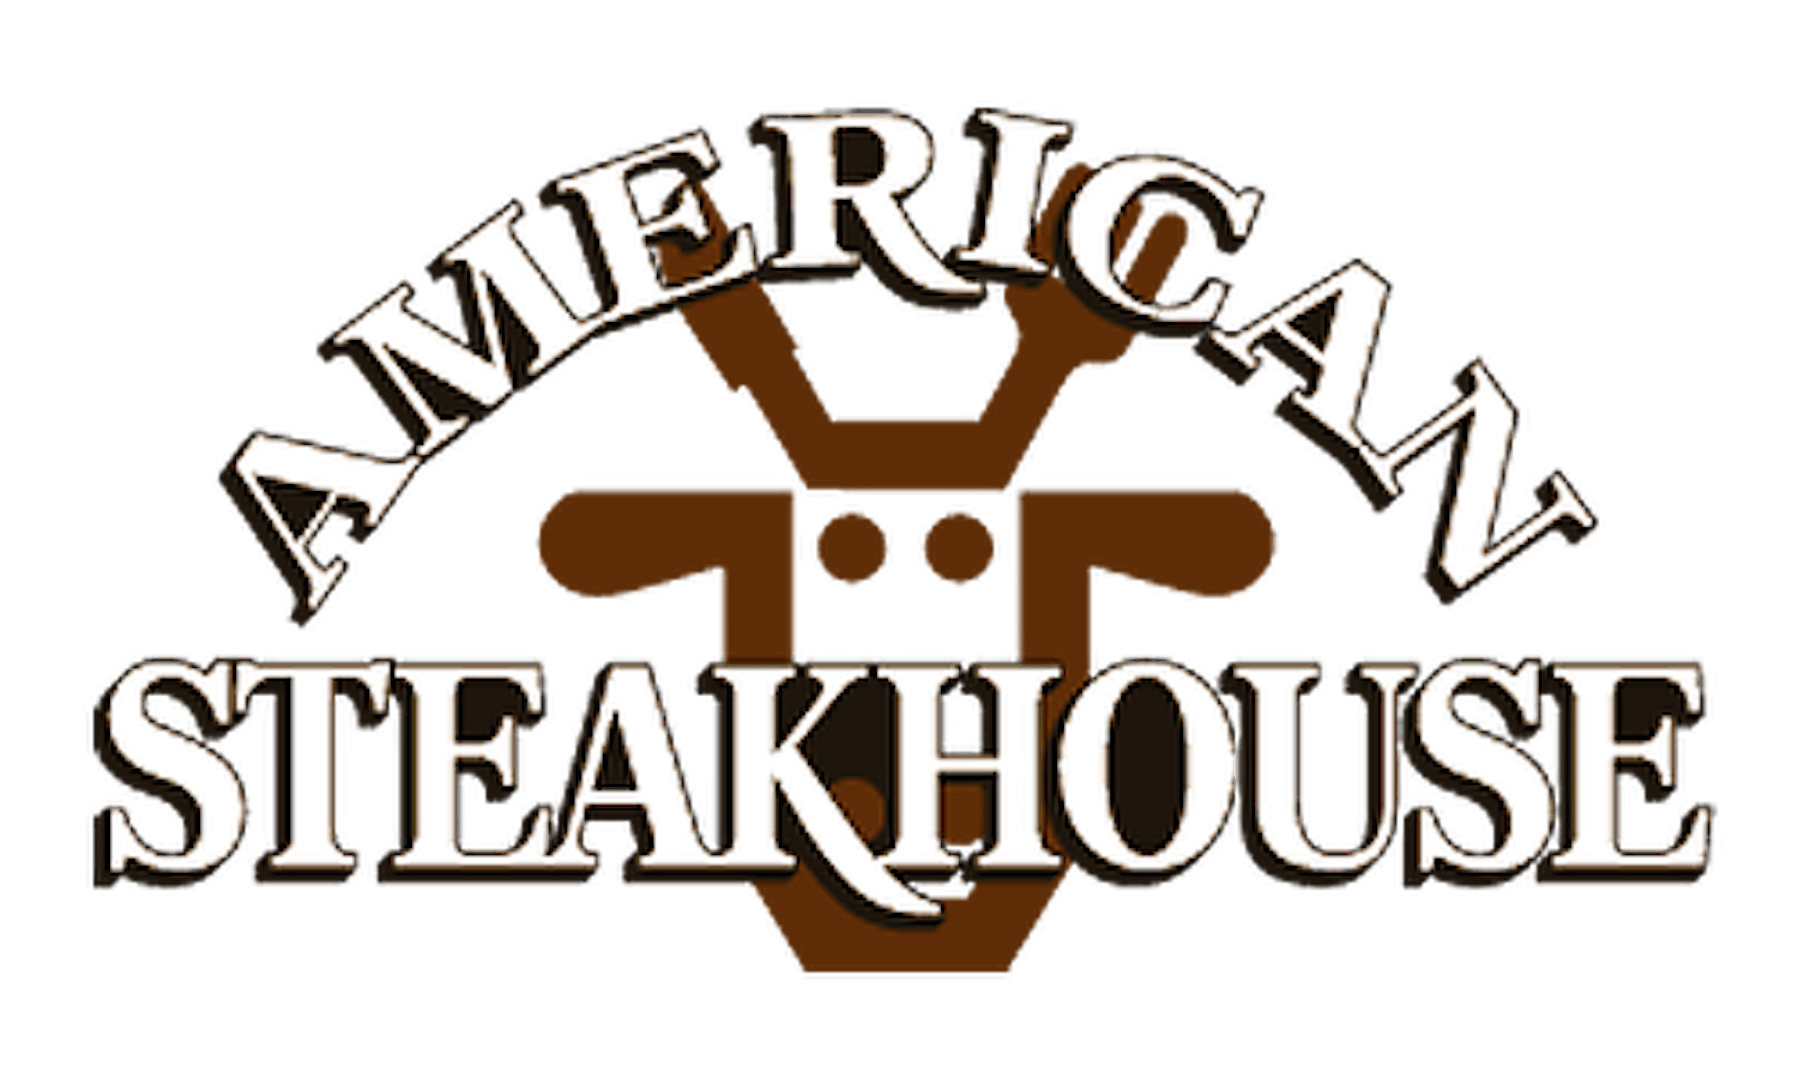 American Steakhouse